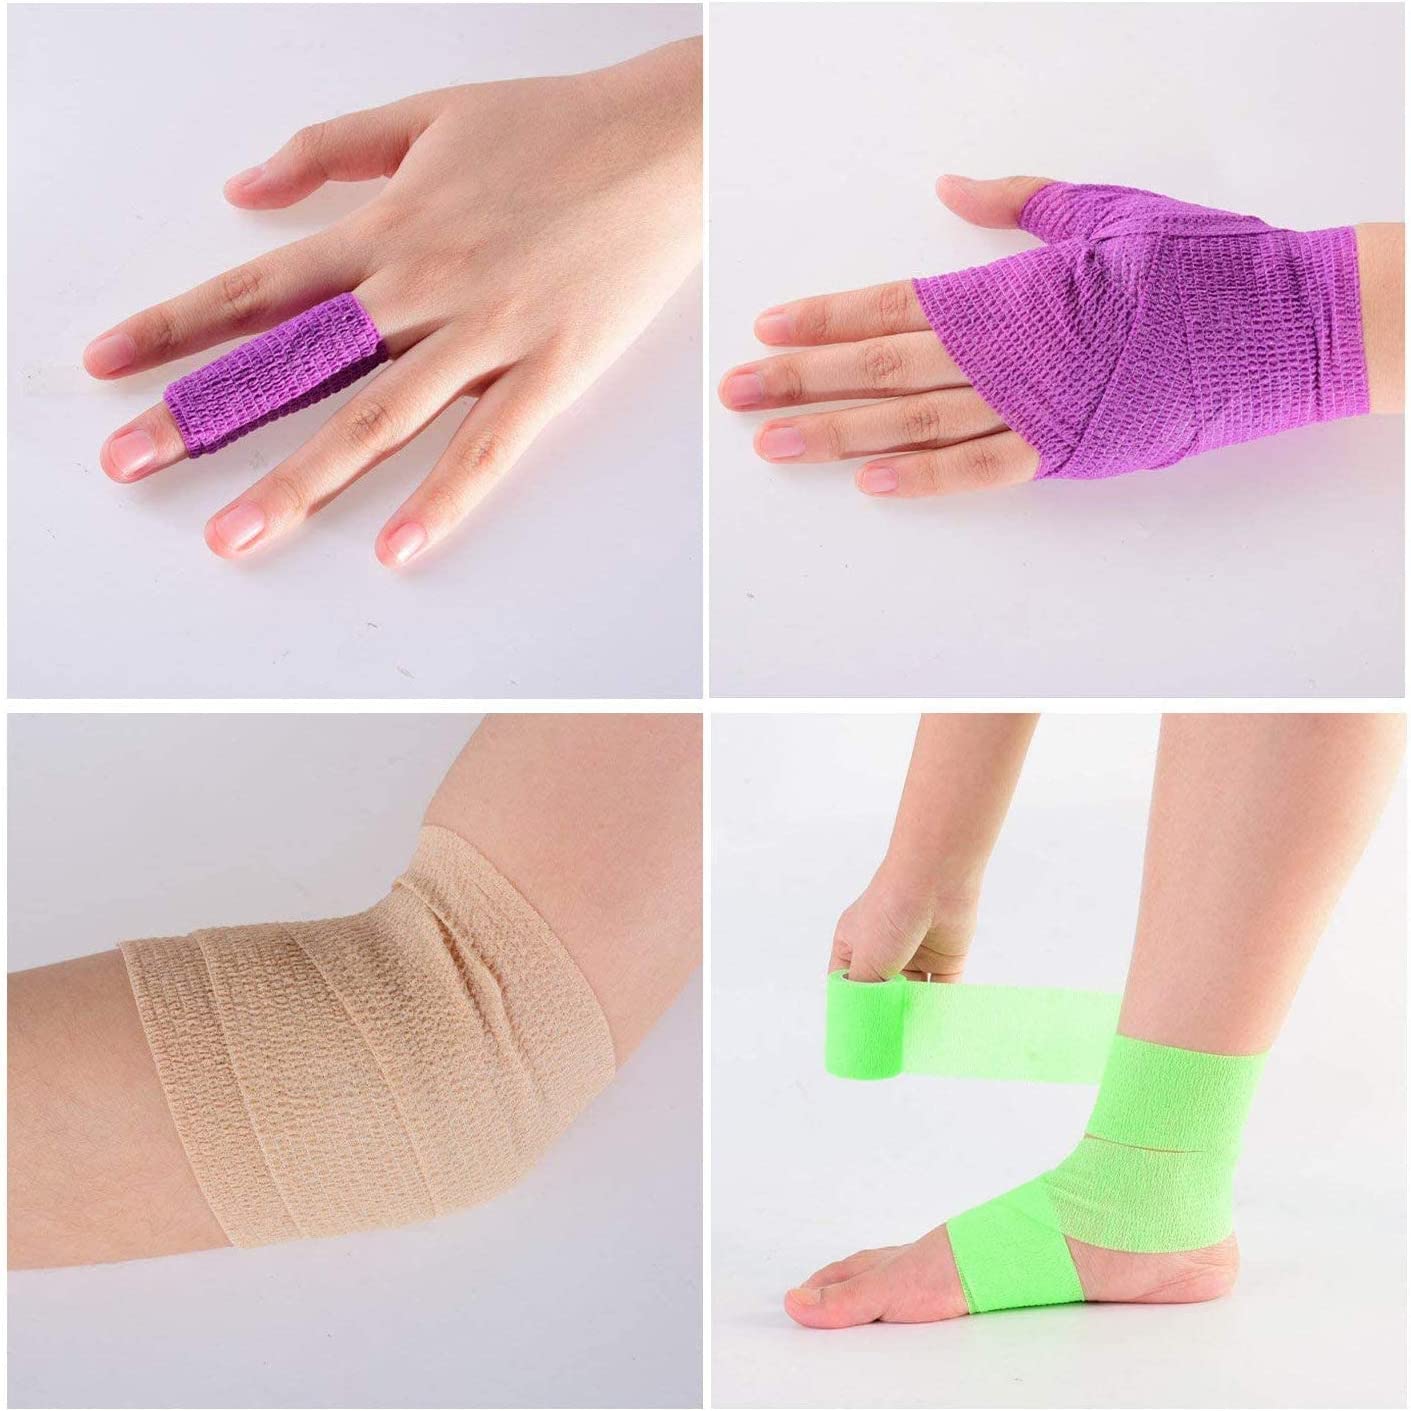 Breathable cohesive bandage Self-adhesive elastic tape for athletic stretching